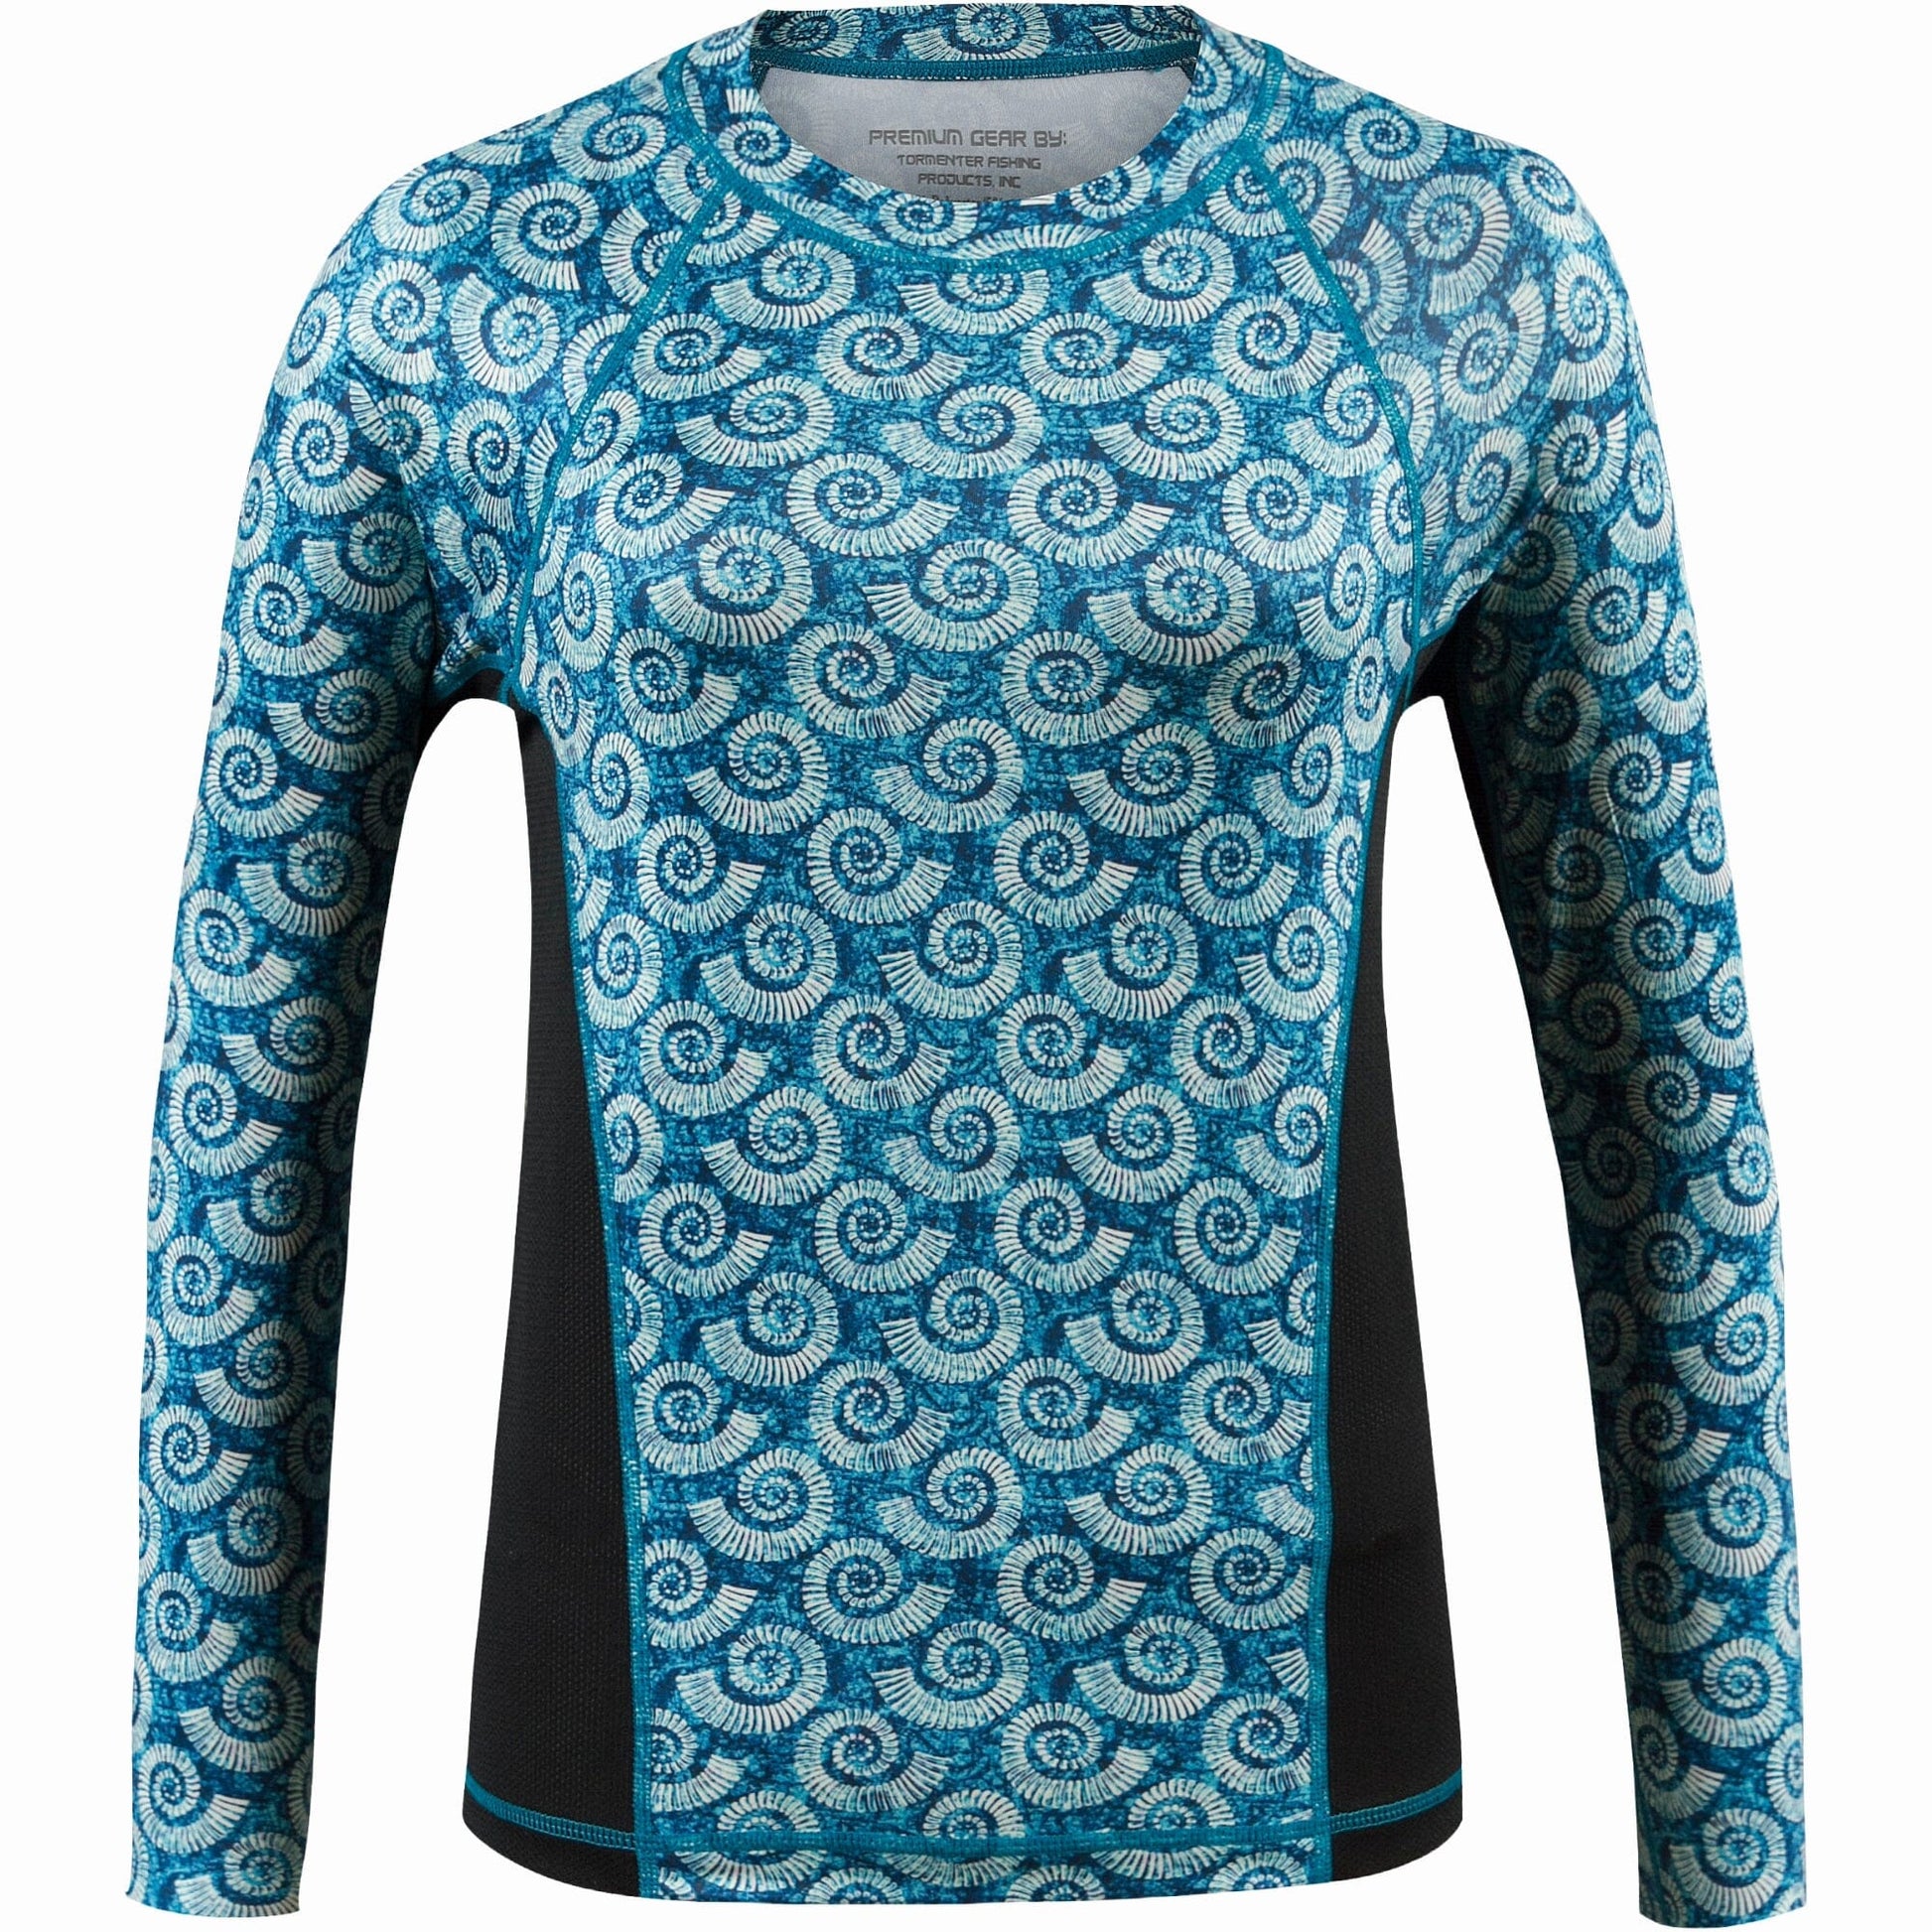 Women's Printed Performance Shirts - Nautilus Teal Ladies Printed SPF Tops Tormenter Ocean 